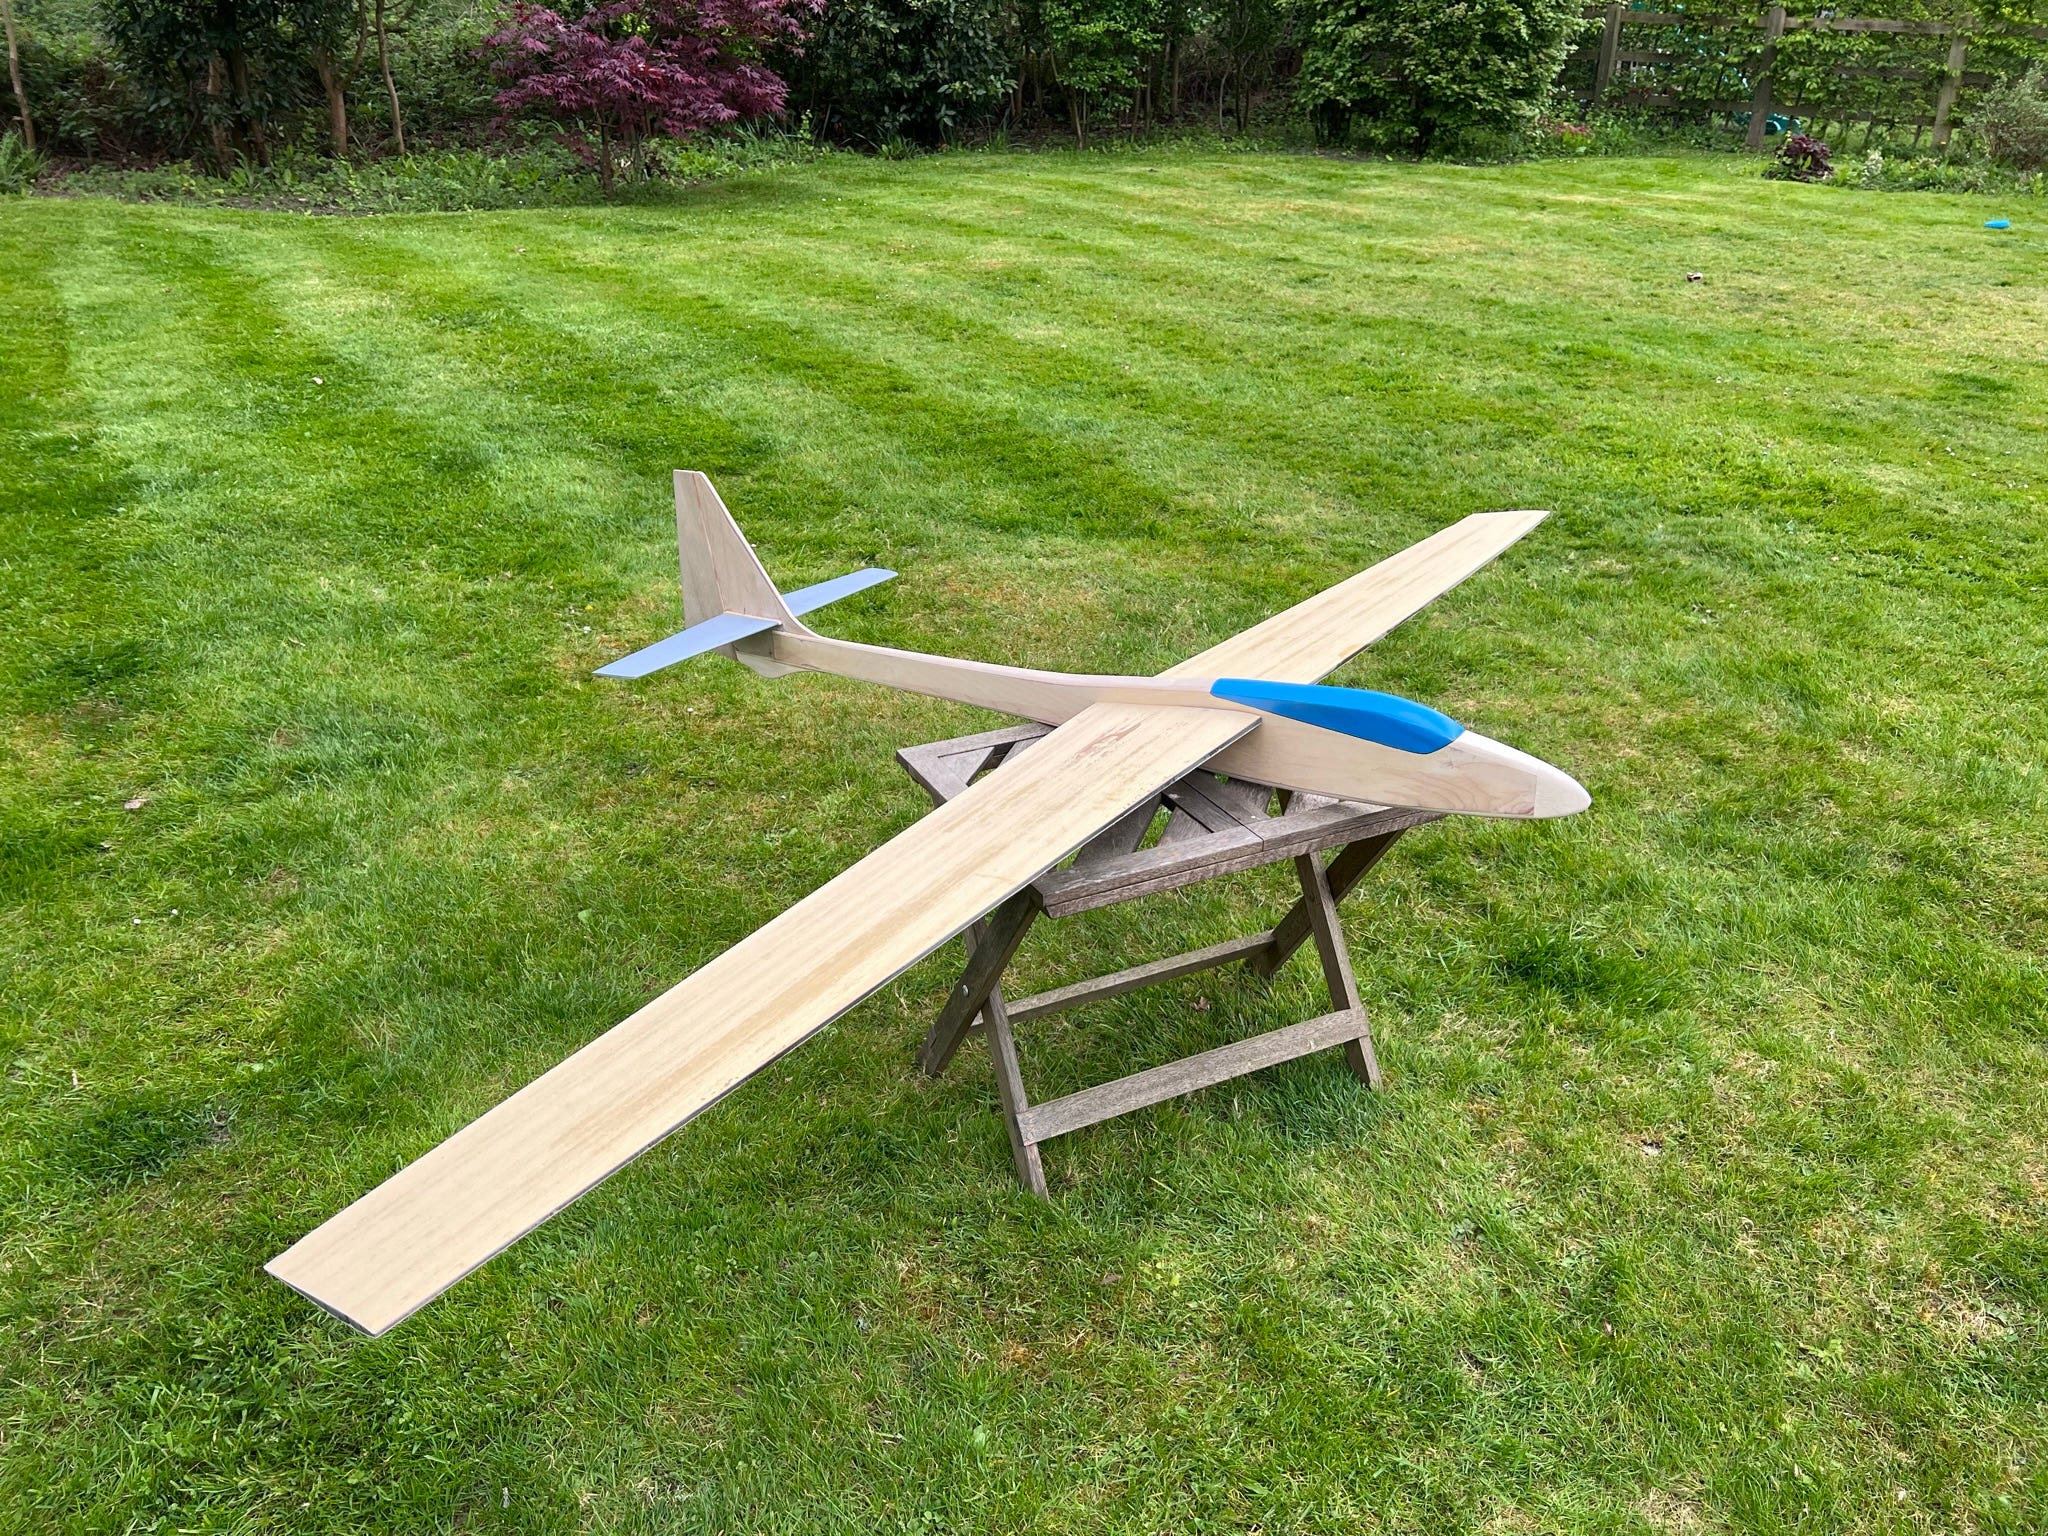 Orcrist A 2.5m VTPR Glider